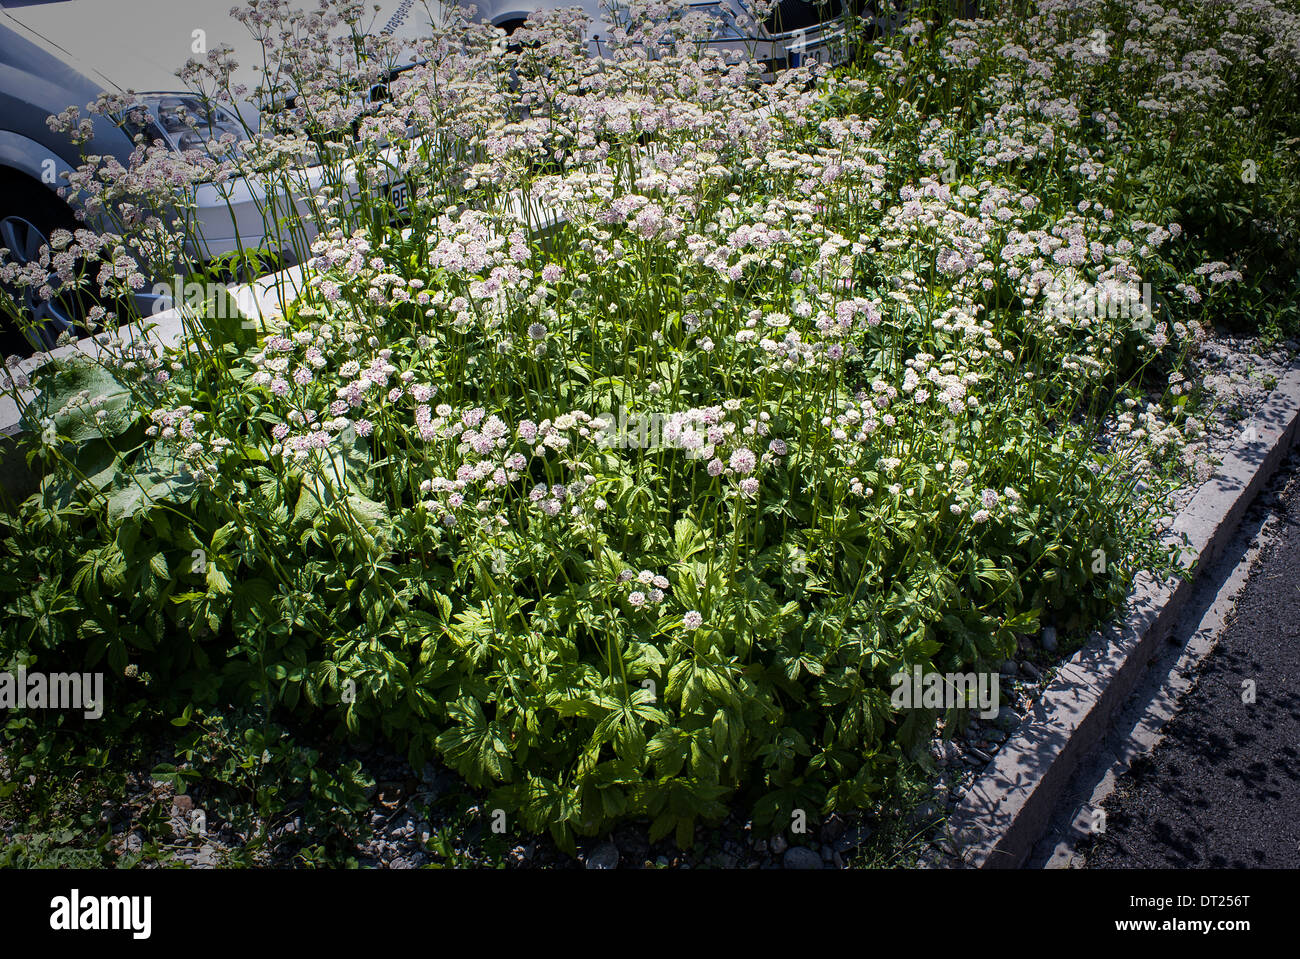 Flower bedding comprising Astrantia plants in flower in Switzerland Stock Photo